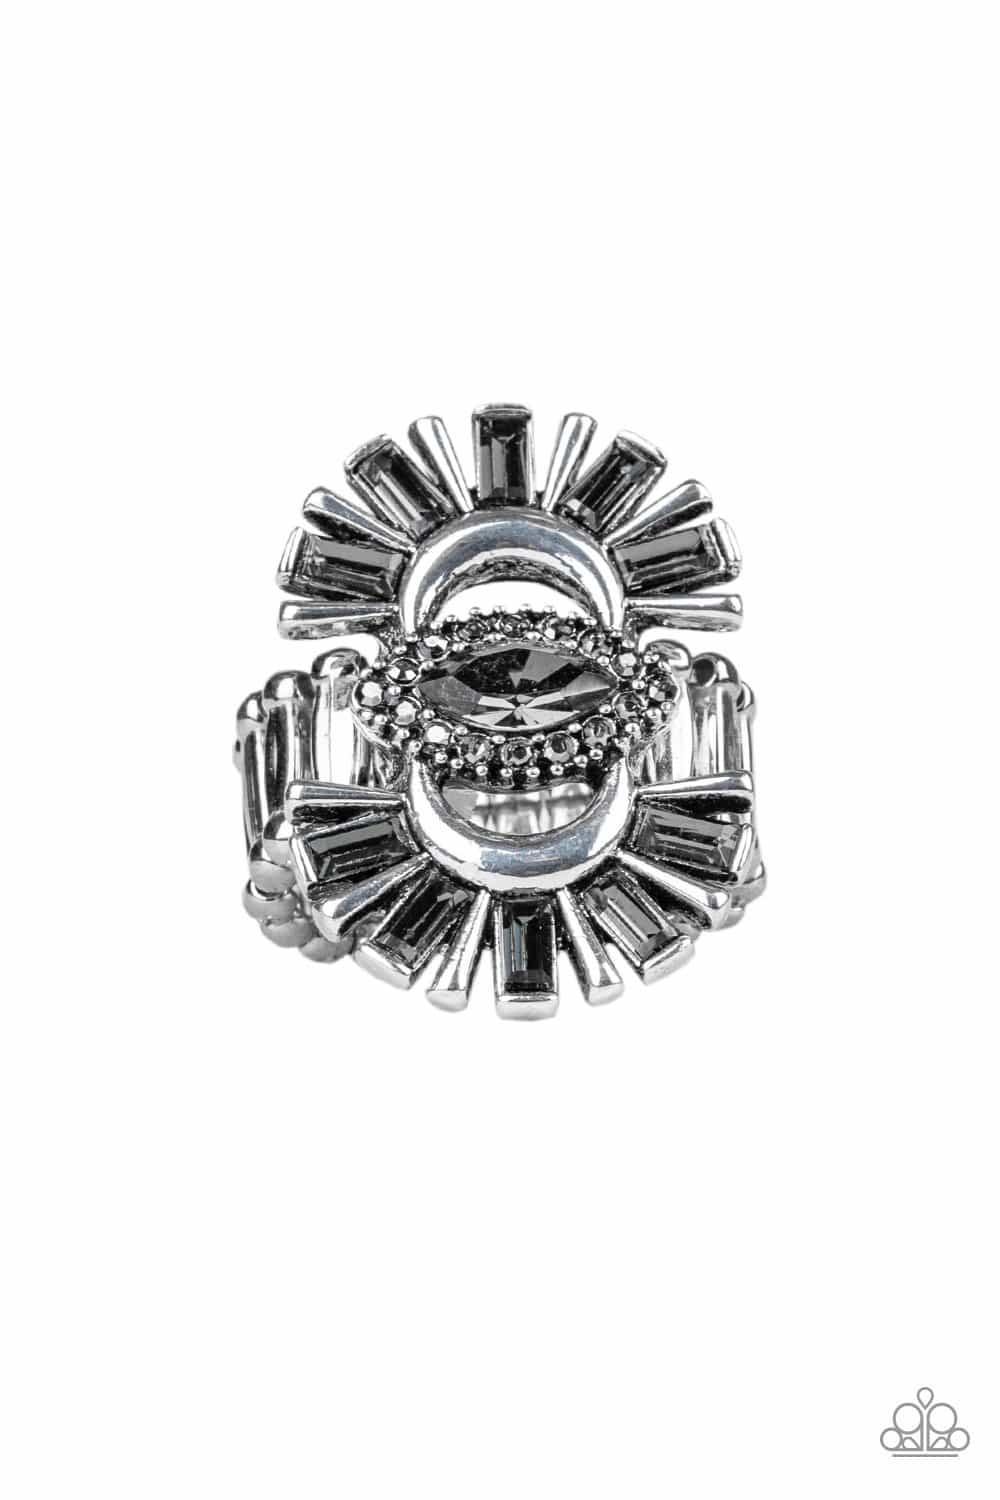 Deco Diva - Silver Smoky Rhinestone Ring - Paparazzi Accessories - GlaMarous Titi Jewels